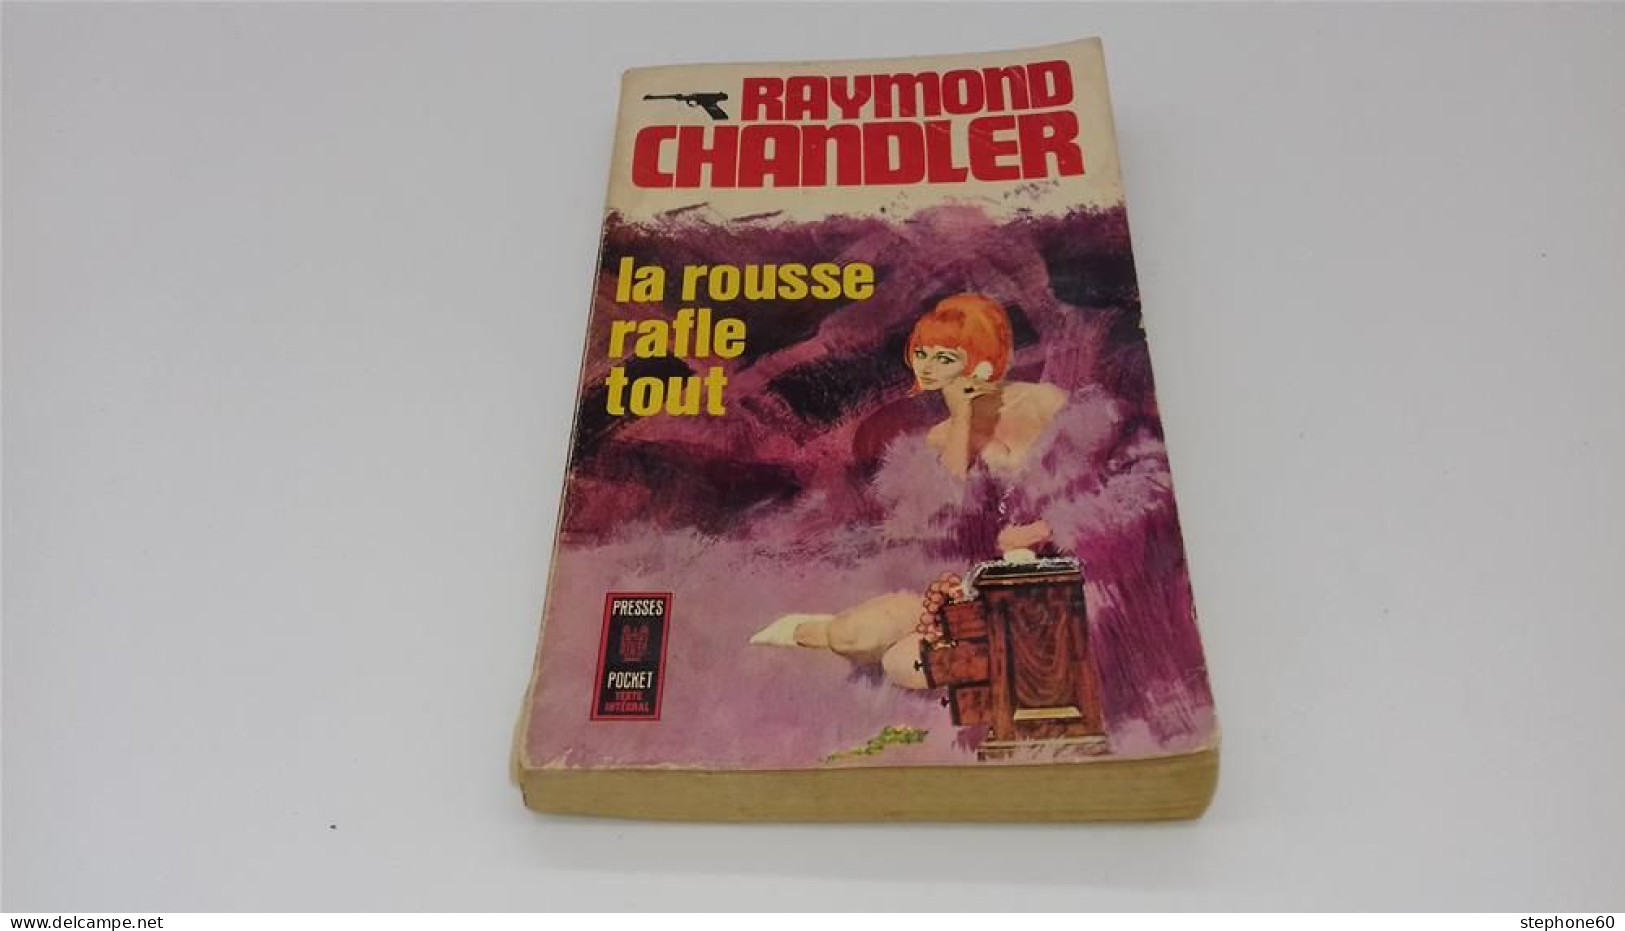 998 - (259) La Rousse Rafle Tout - Raymond Chandler - Pocket